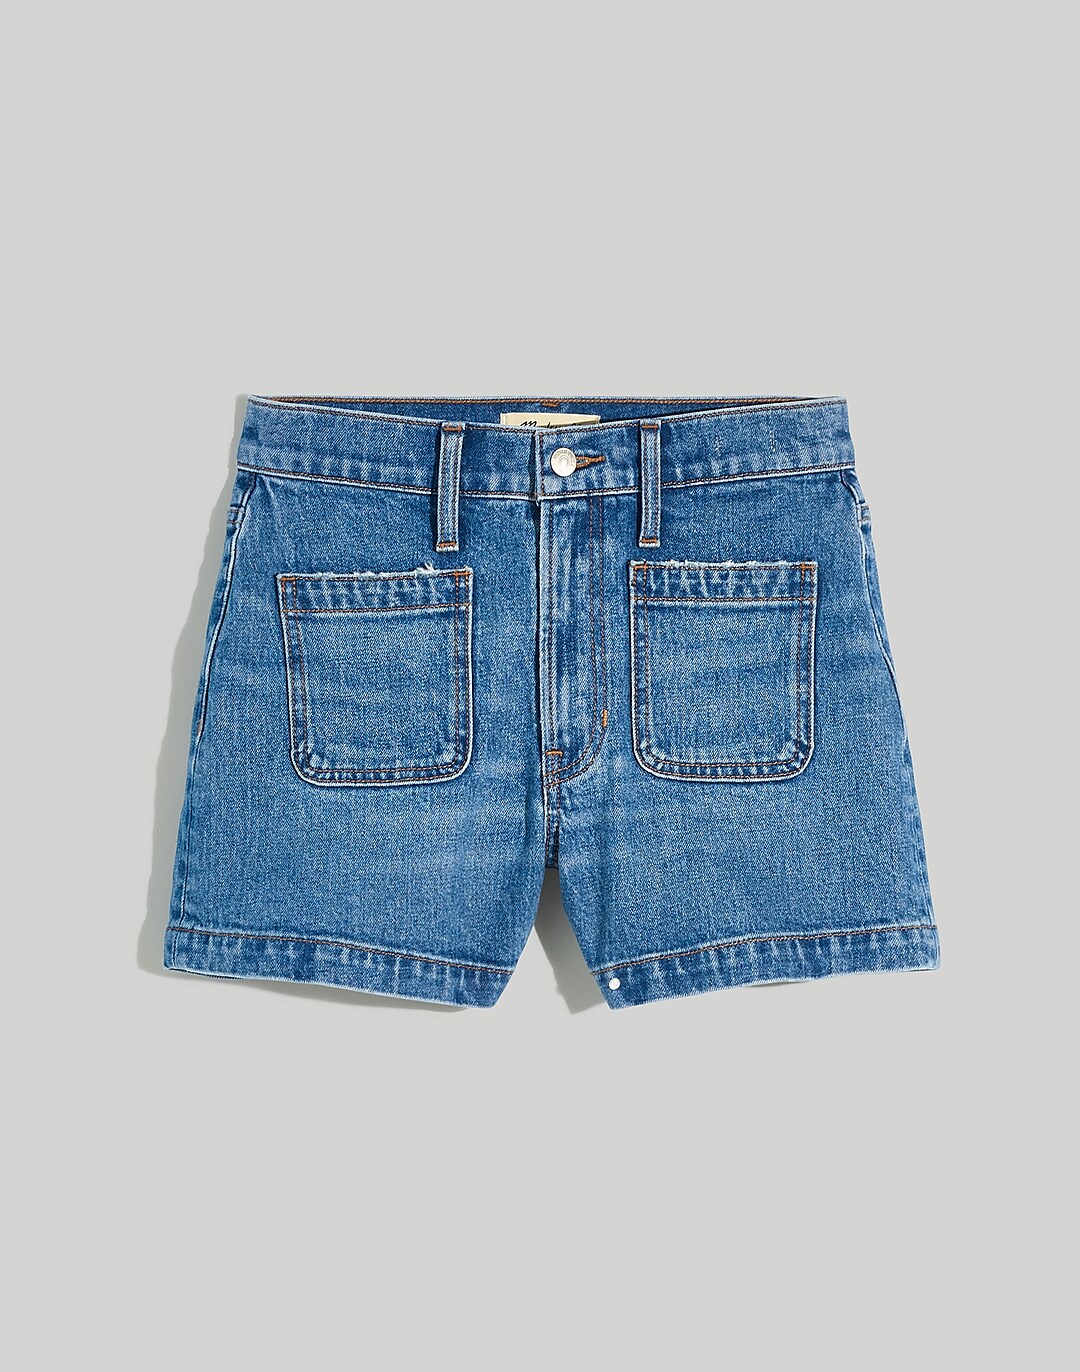 Patch-Pocket Denim Shorts in Earlwood Wash